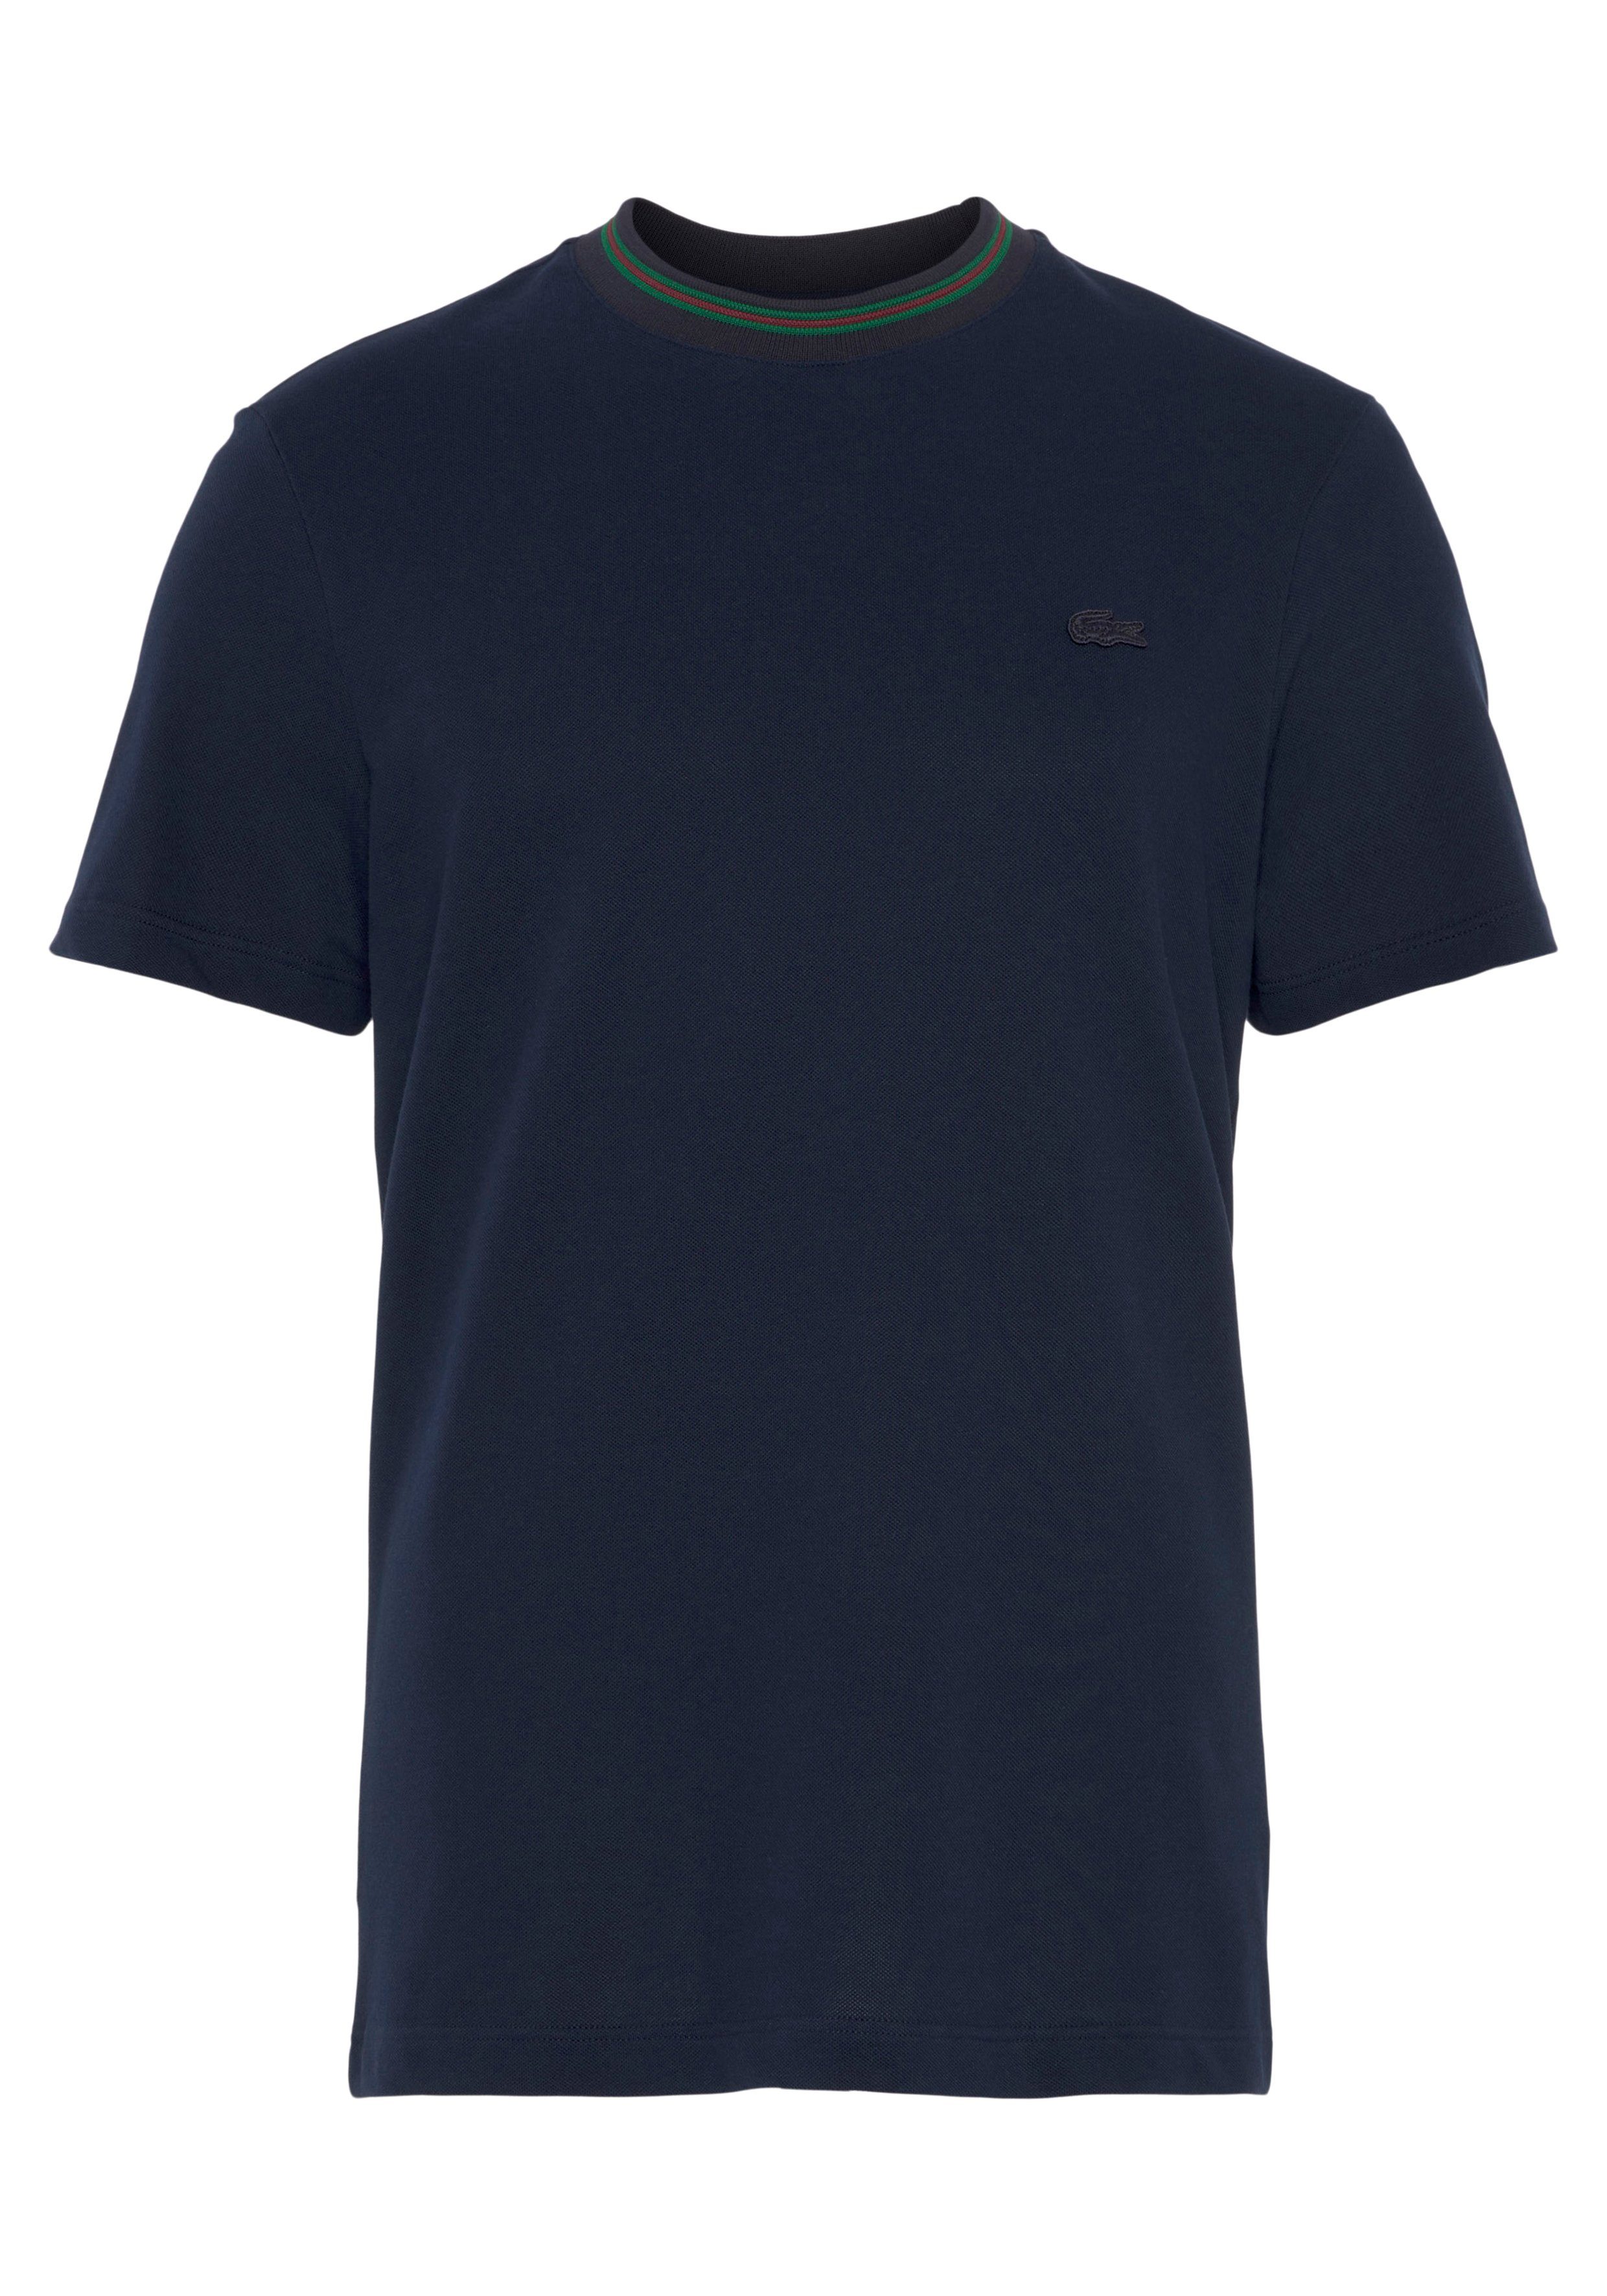 BLUE Rundhalsausschnitt Lacoste T-SHIRT T-Shirt mit NAVY